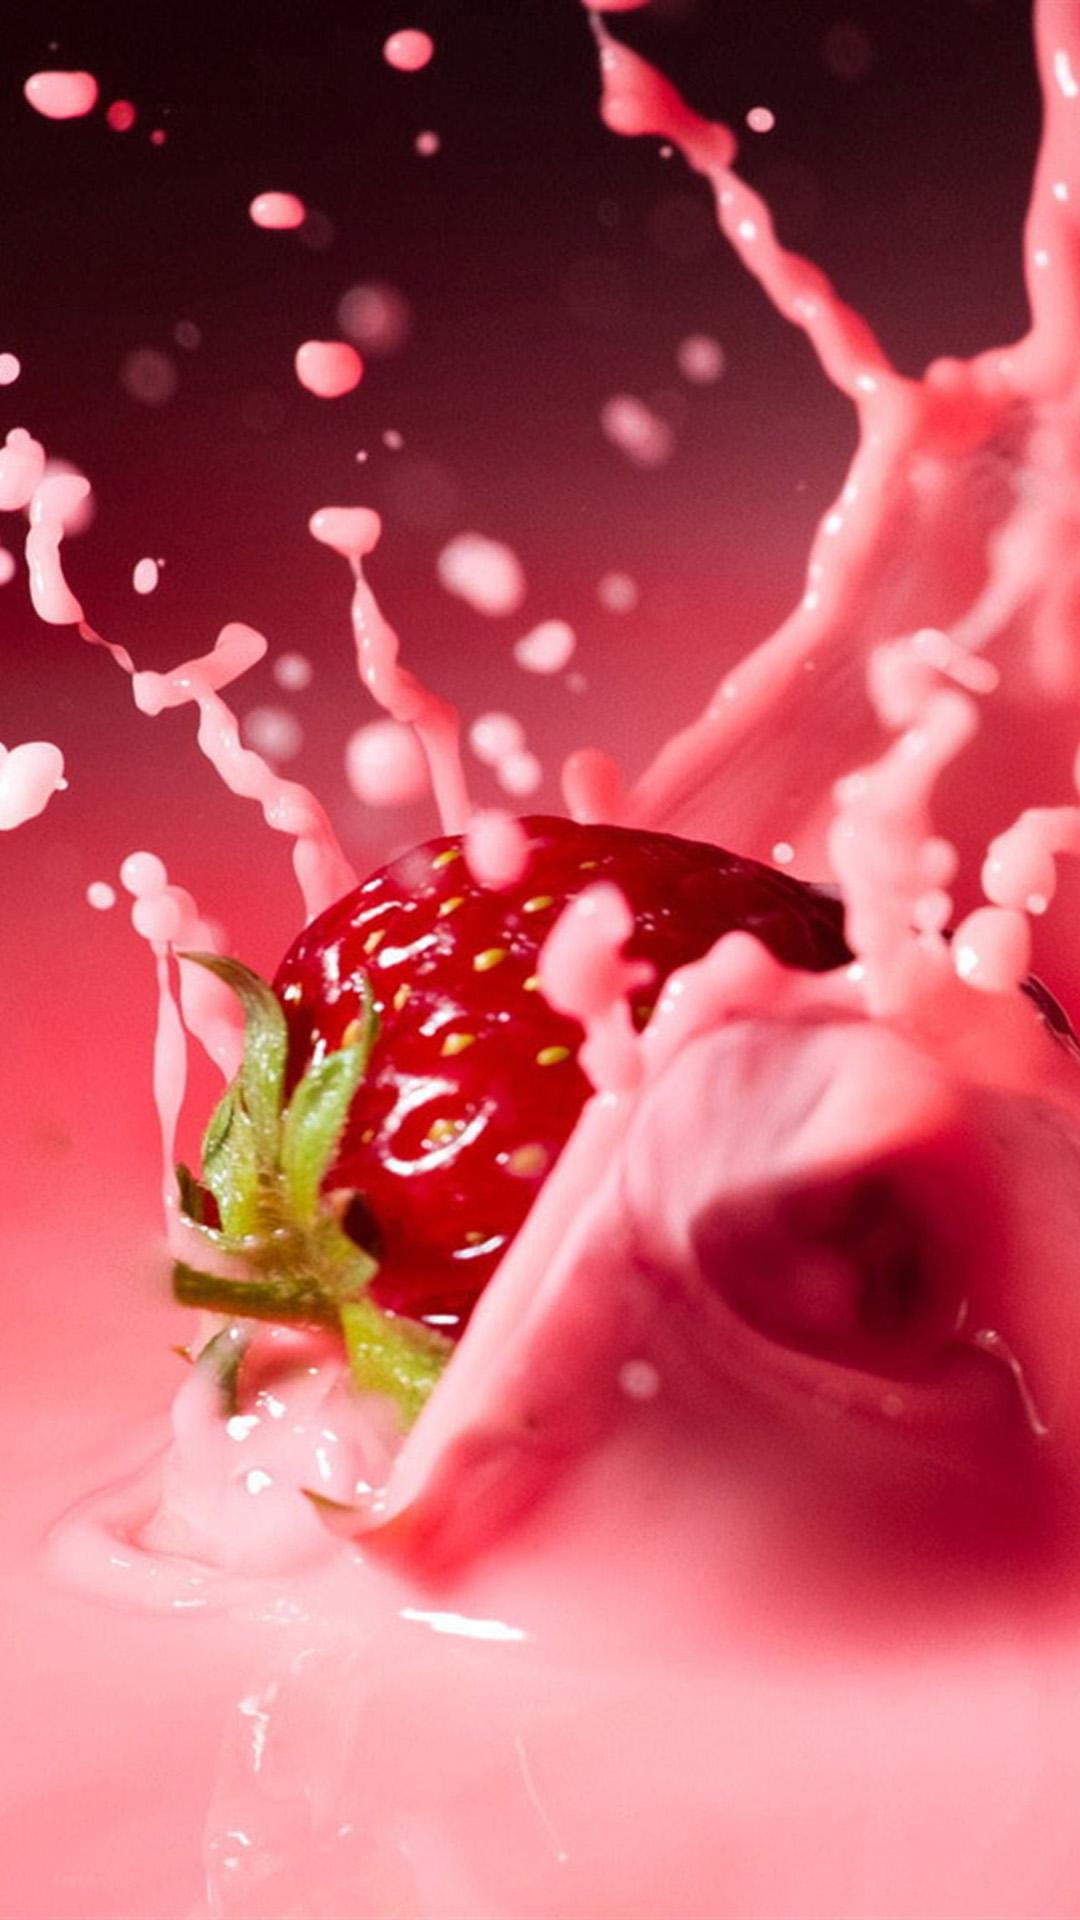 Strawberry Milk Spatter iPhone 8 Wallpaper Free Download